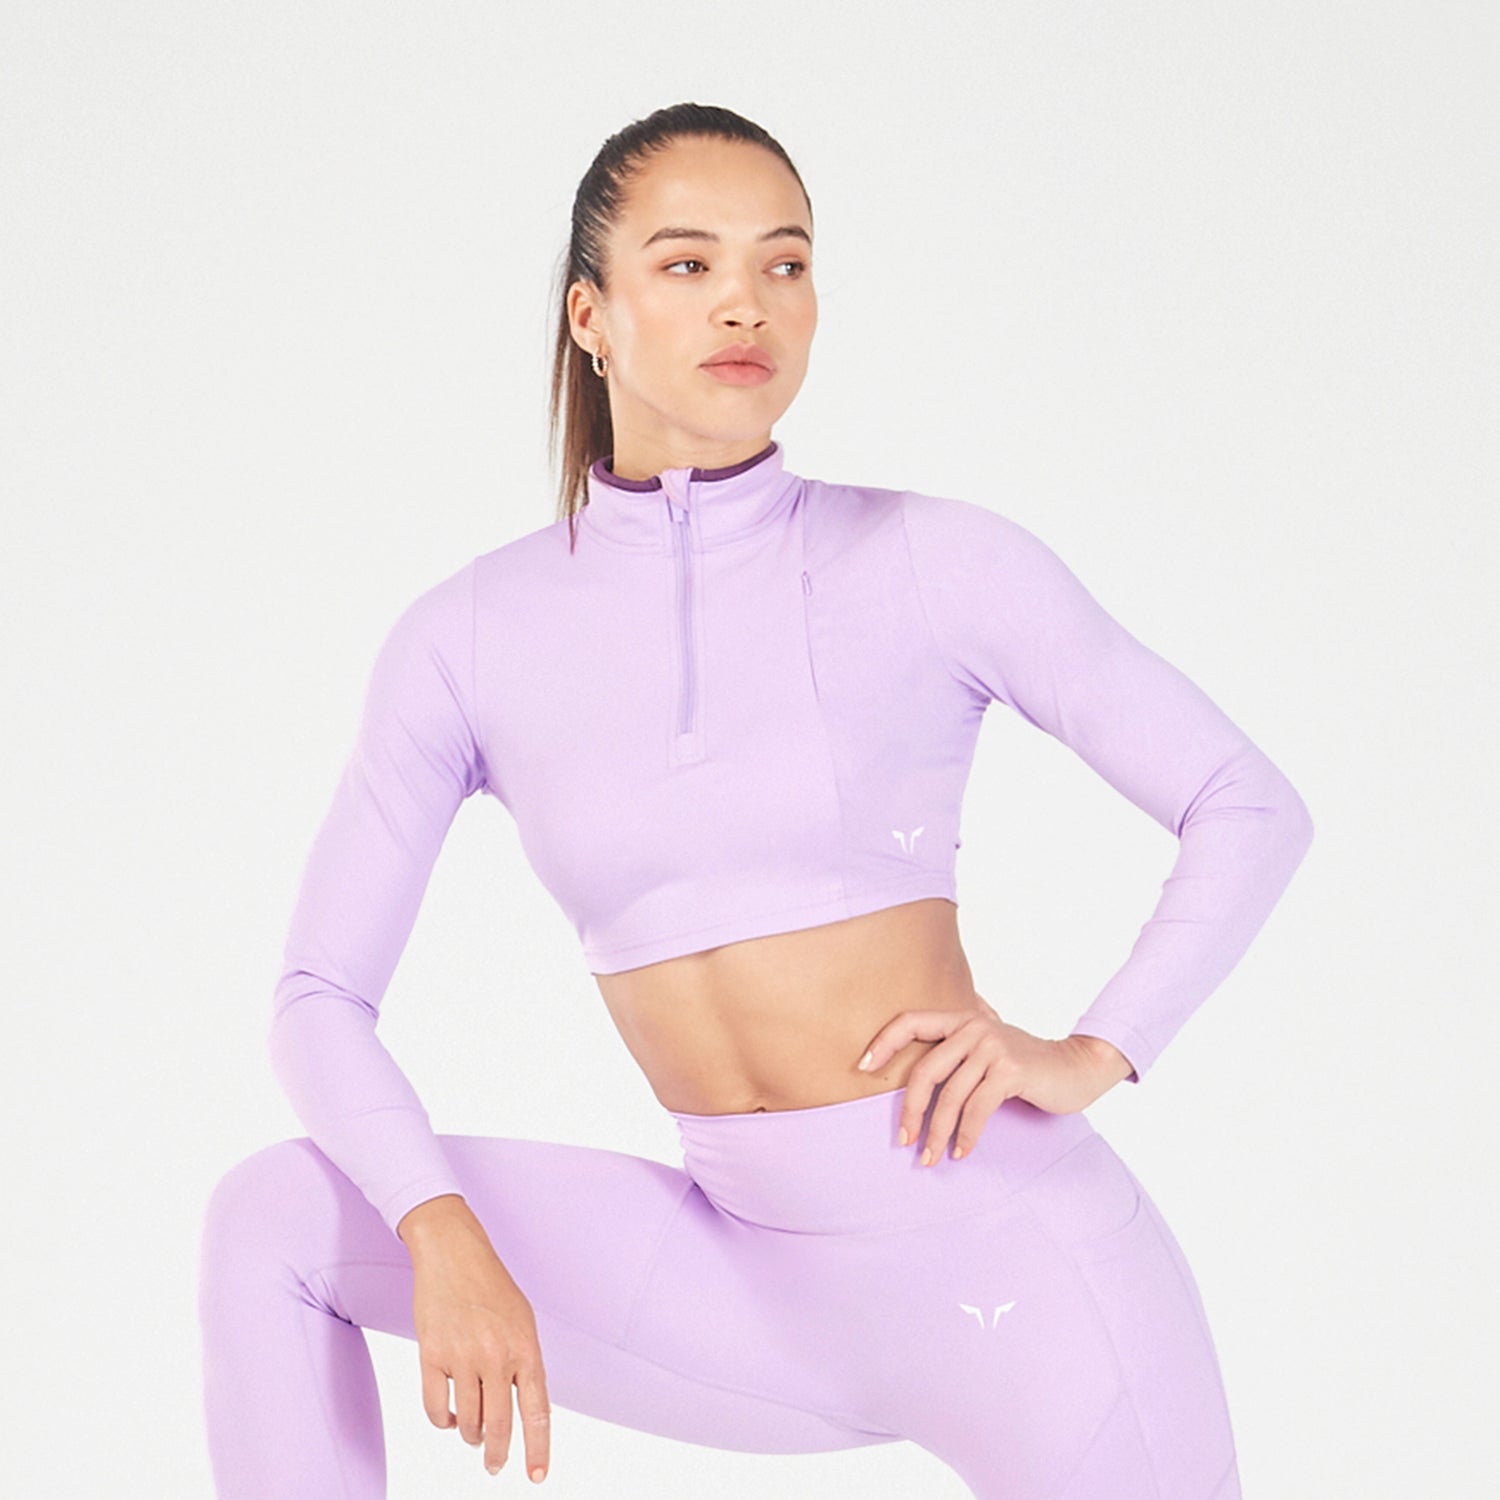 squatwolf-workout-clothes-qtr-zip-serpent-top-purple-rose-gym-t-shirts-for-women